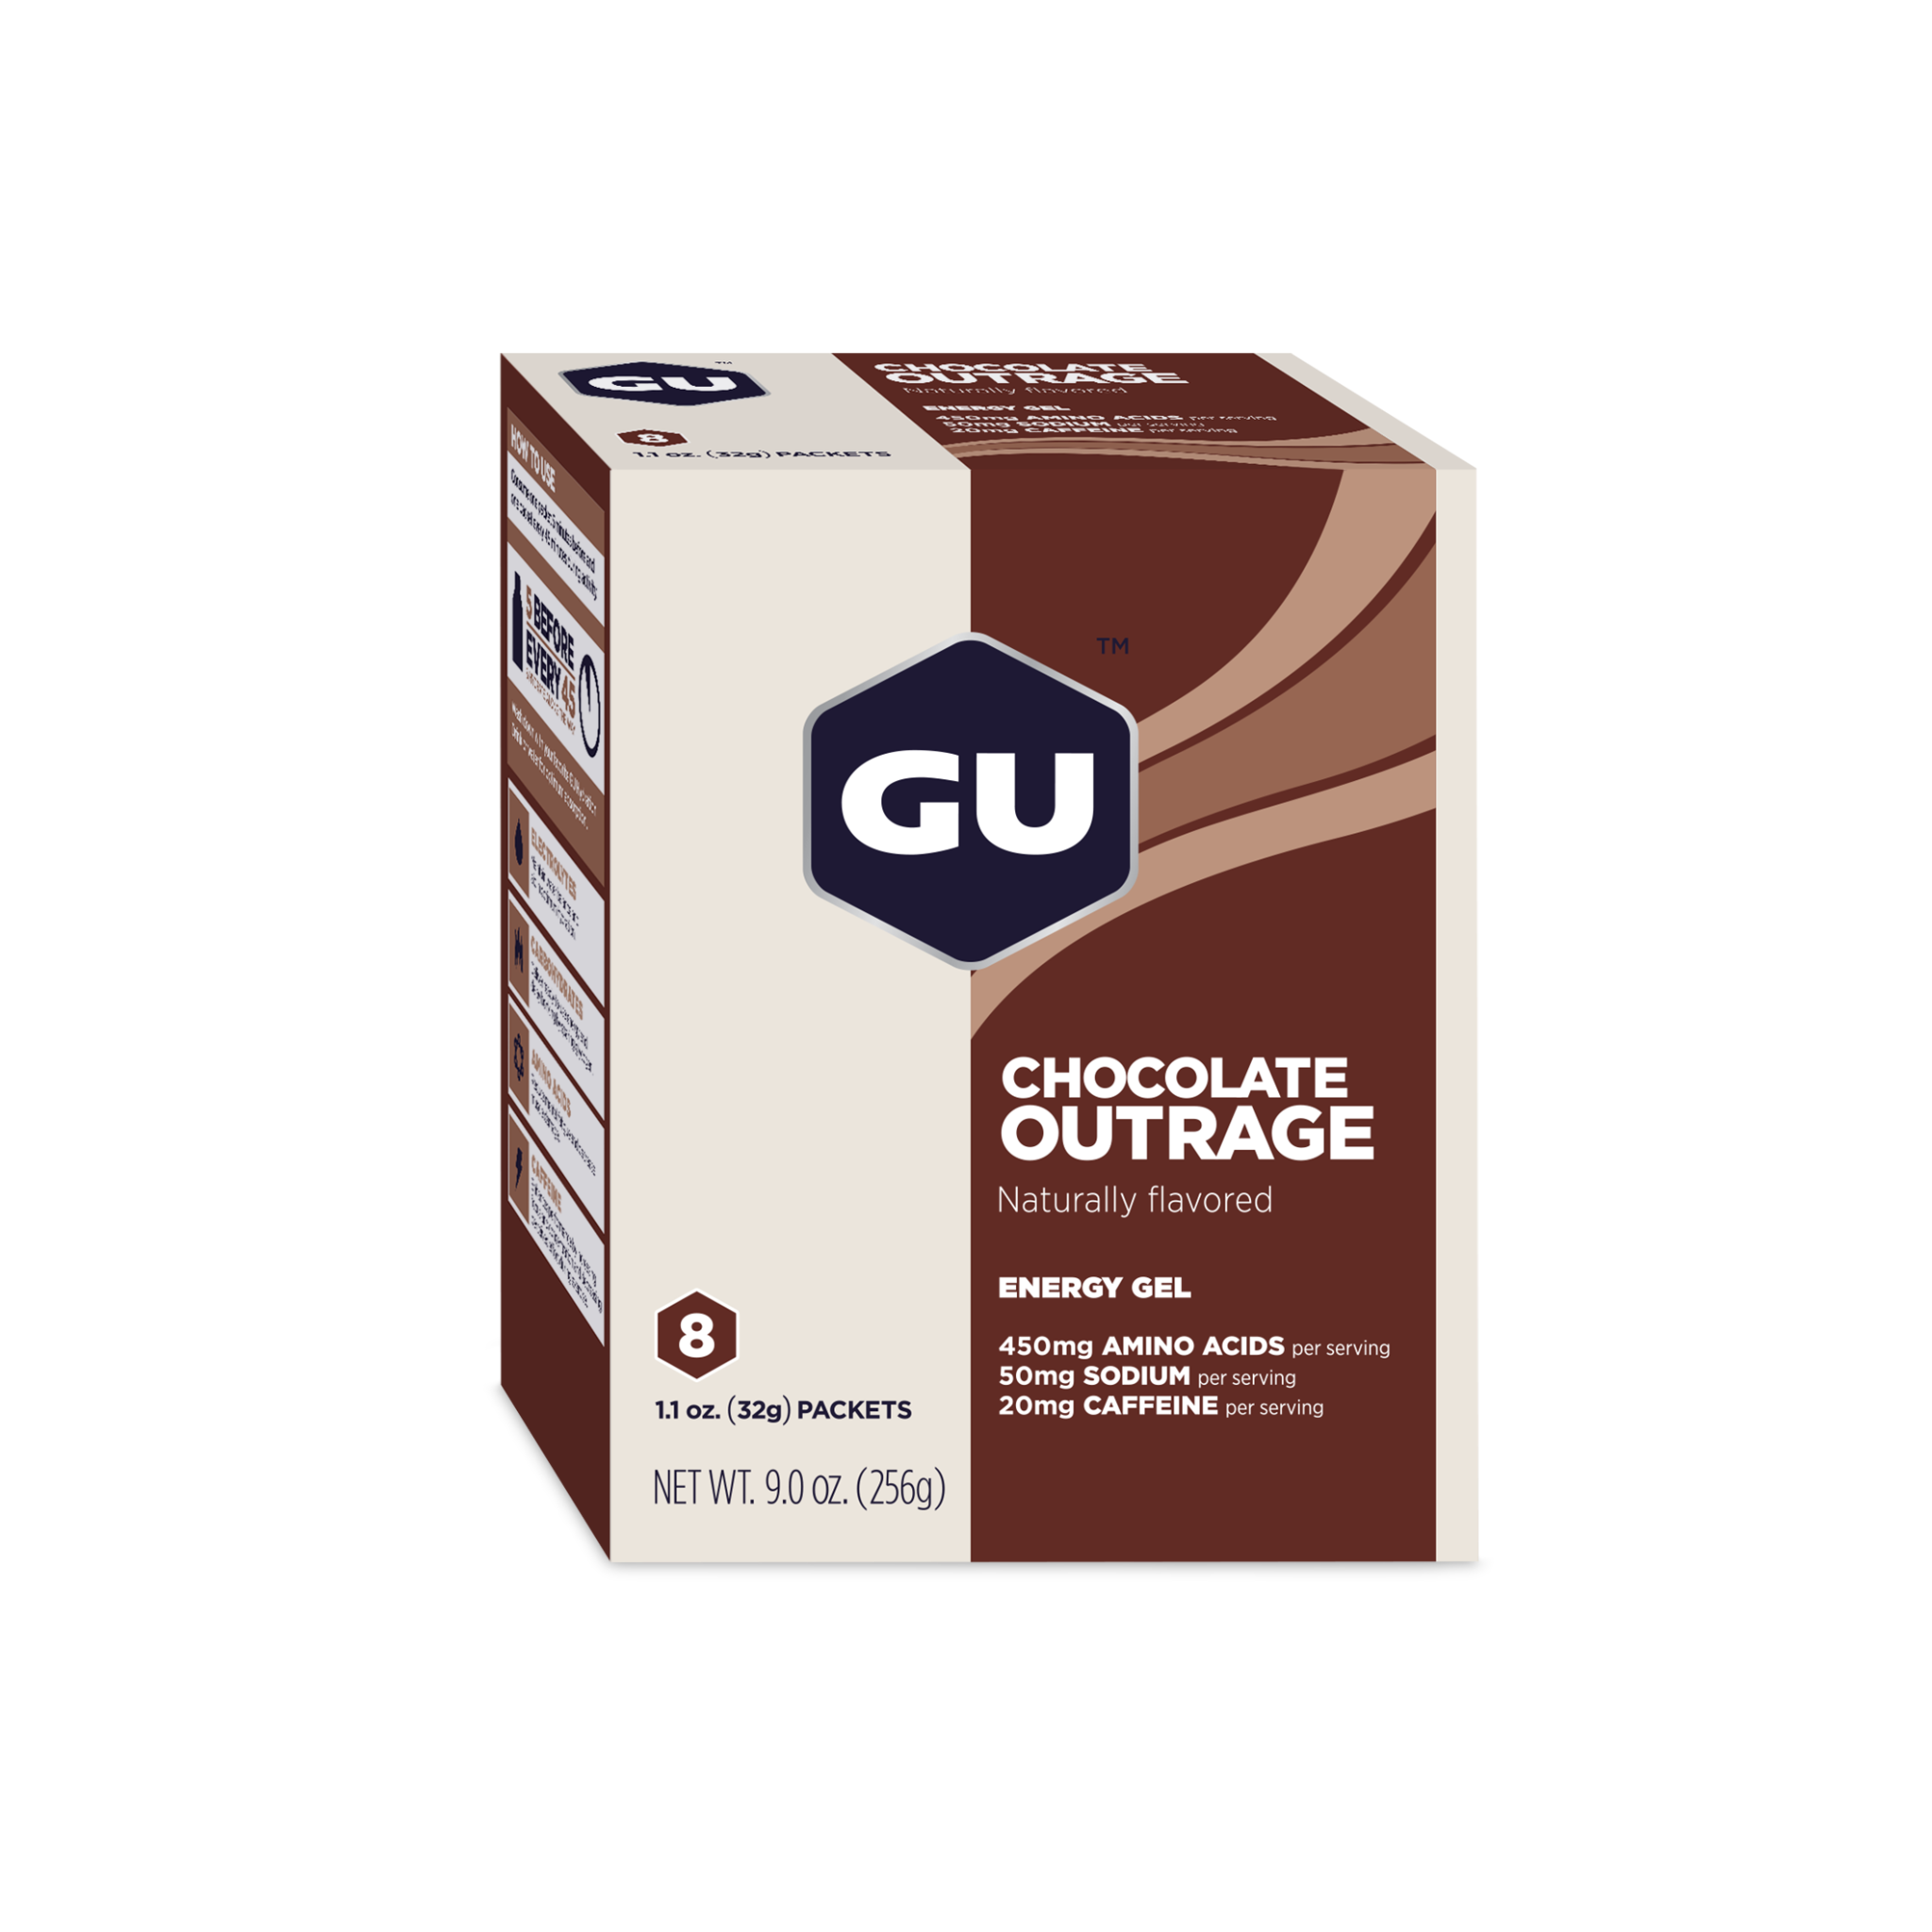 GU SPORTS GU ENERGY GEL - 8 PACK BOX CHOCOLATE OUTRAGE